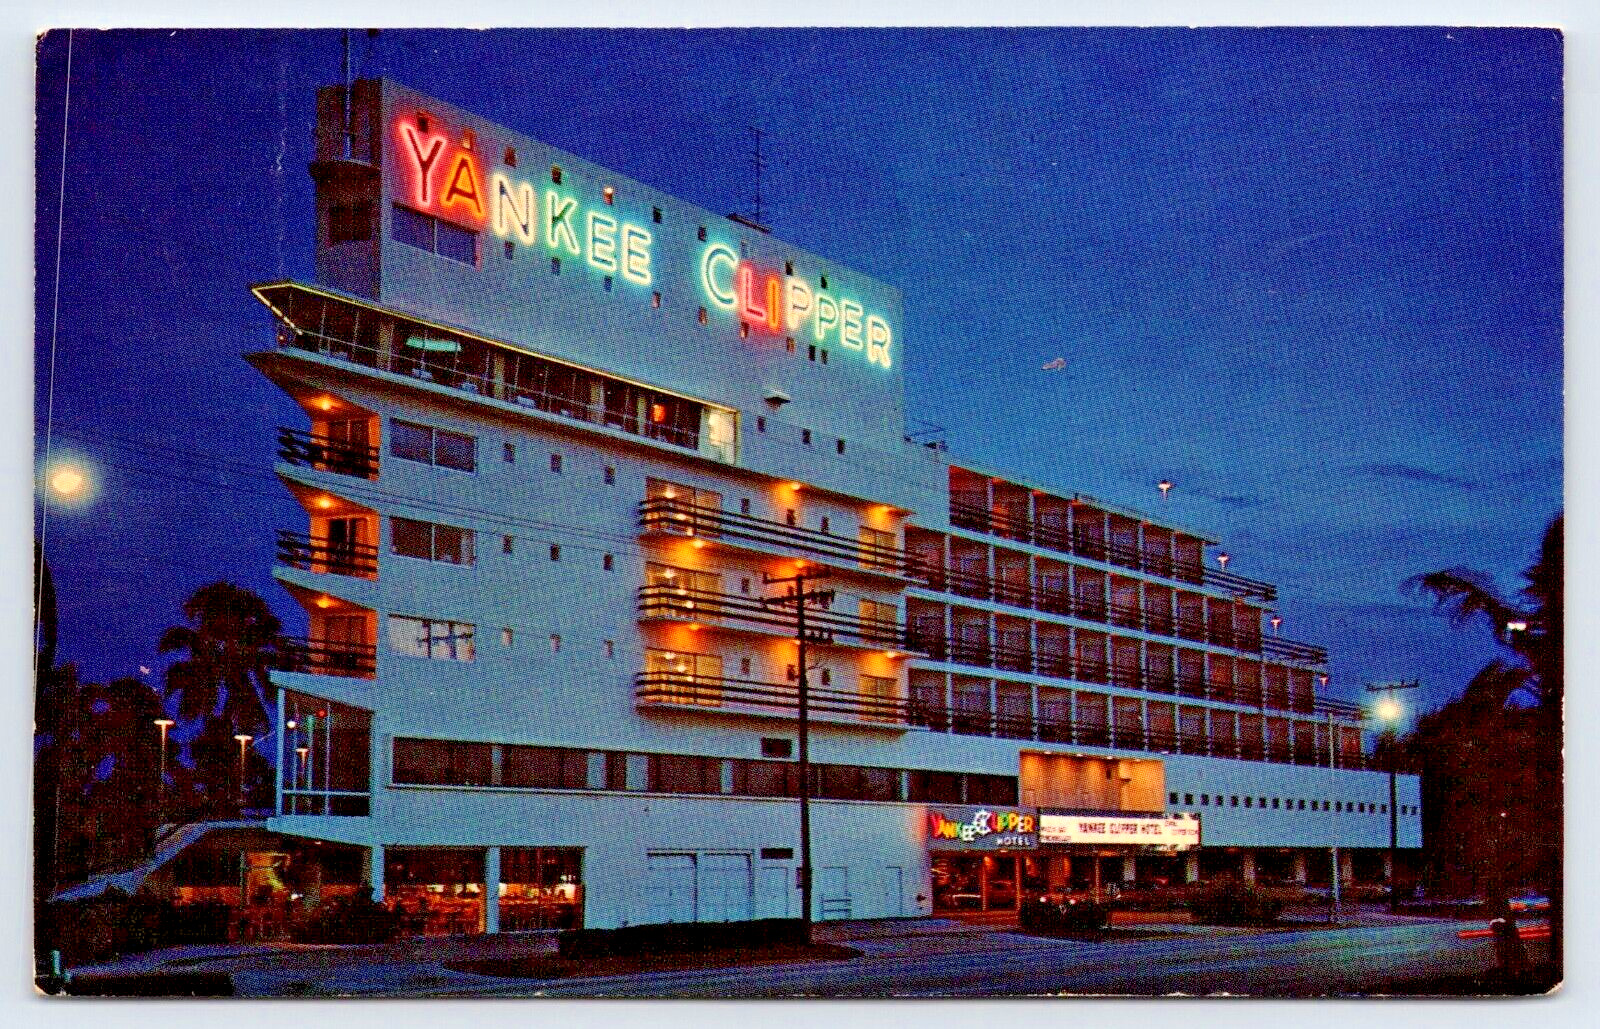 Iconic Yankee Clipper Hotel Night Scene Neon Roof Sign Las Vegas NV Postcard A16